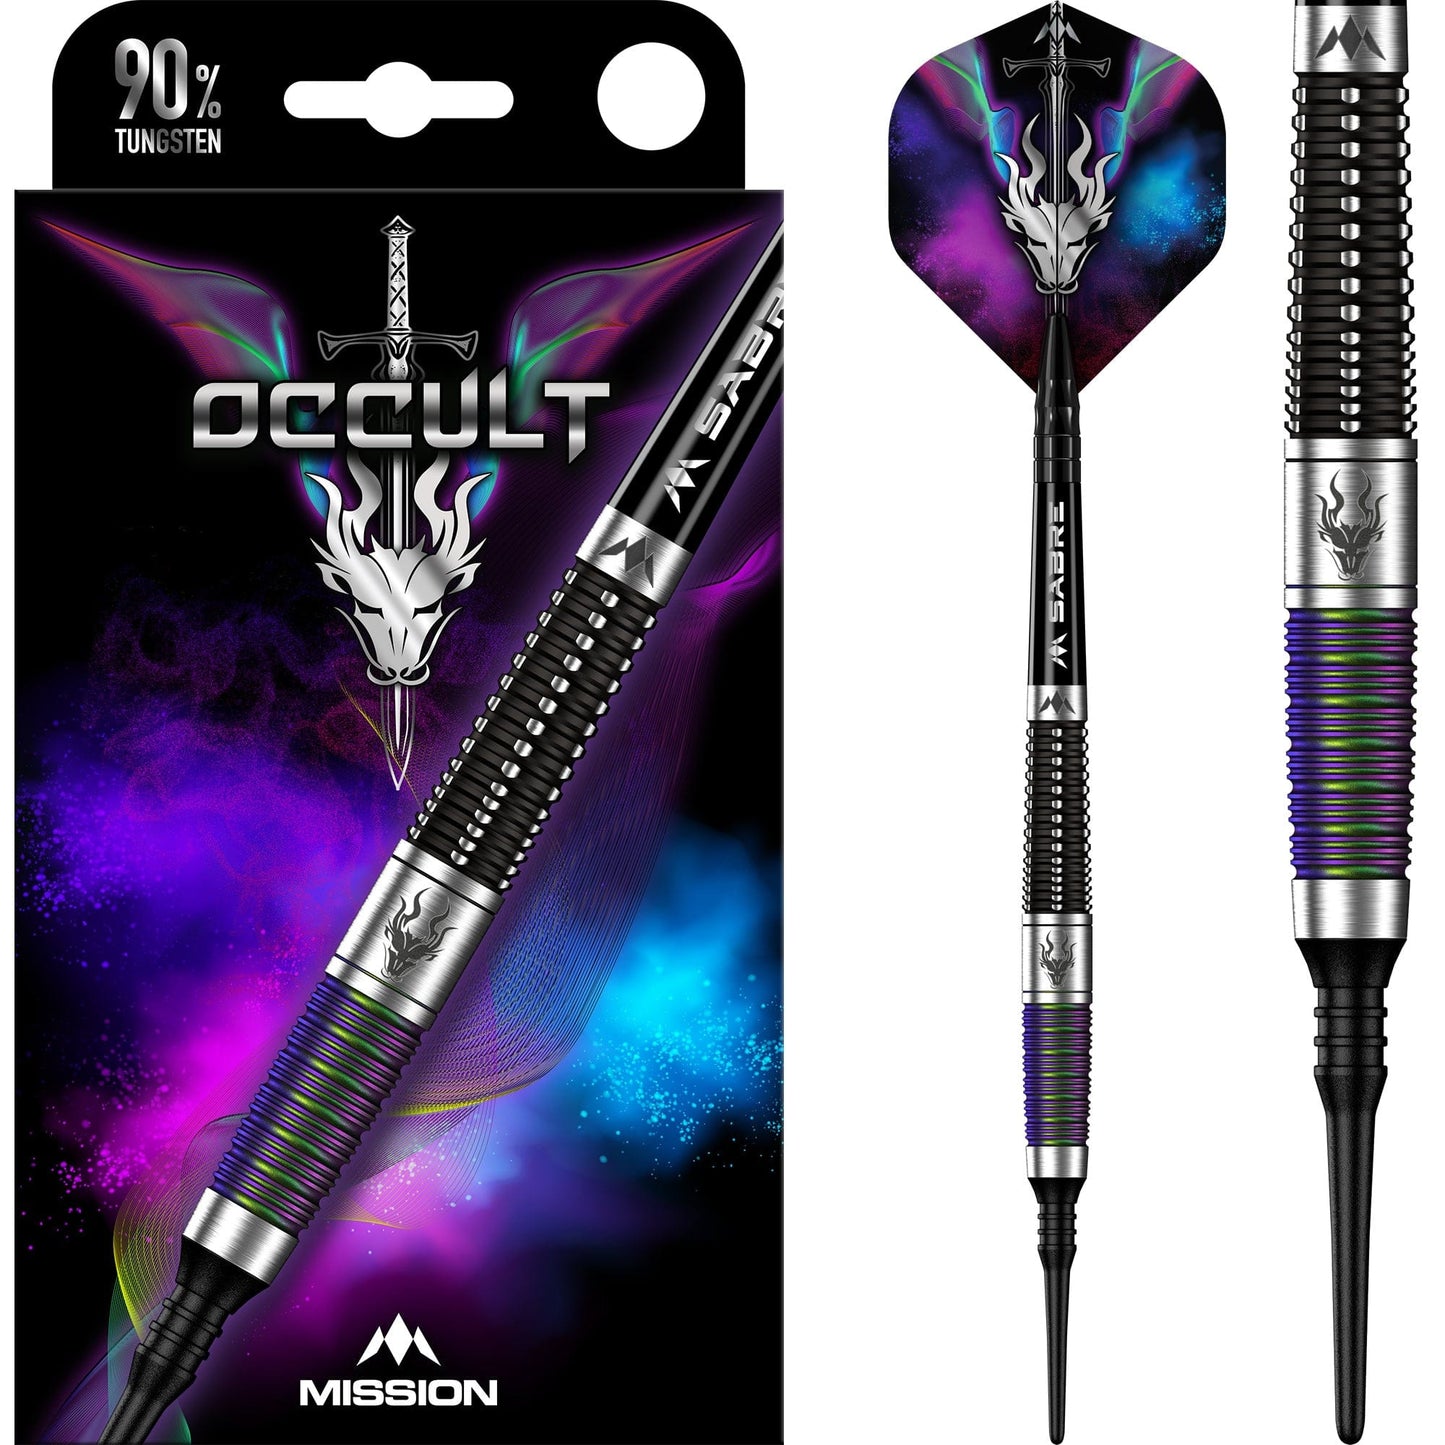 Mission Occult Darts - Soft Tip - 90% - Black & Coral PVD 18g